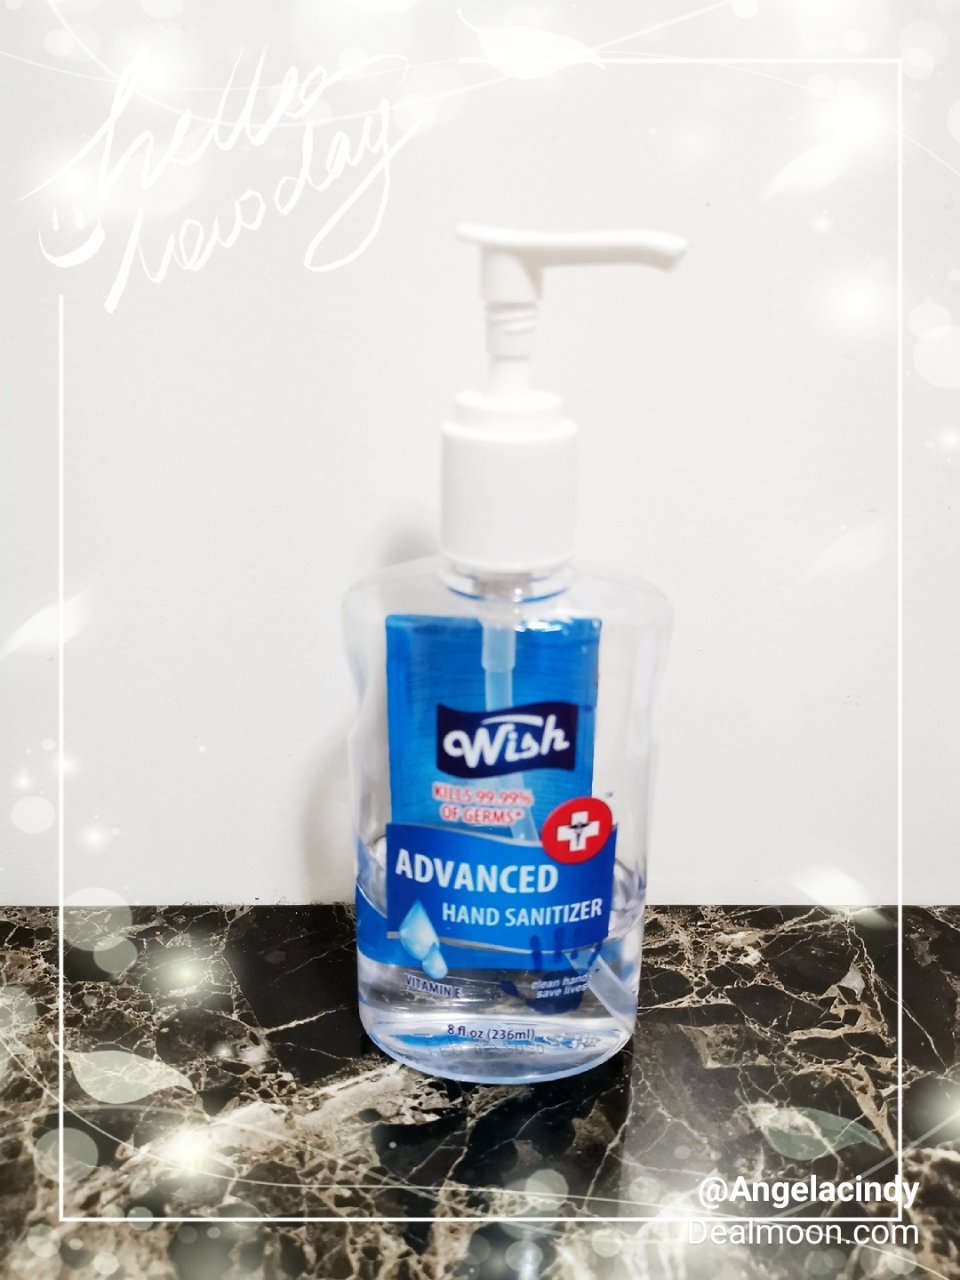 Wish Advanced Hand Sanitizer